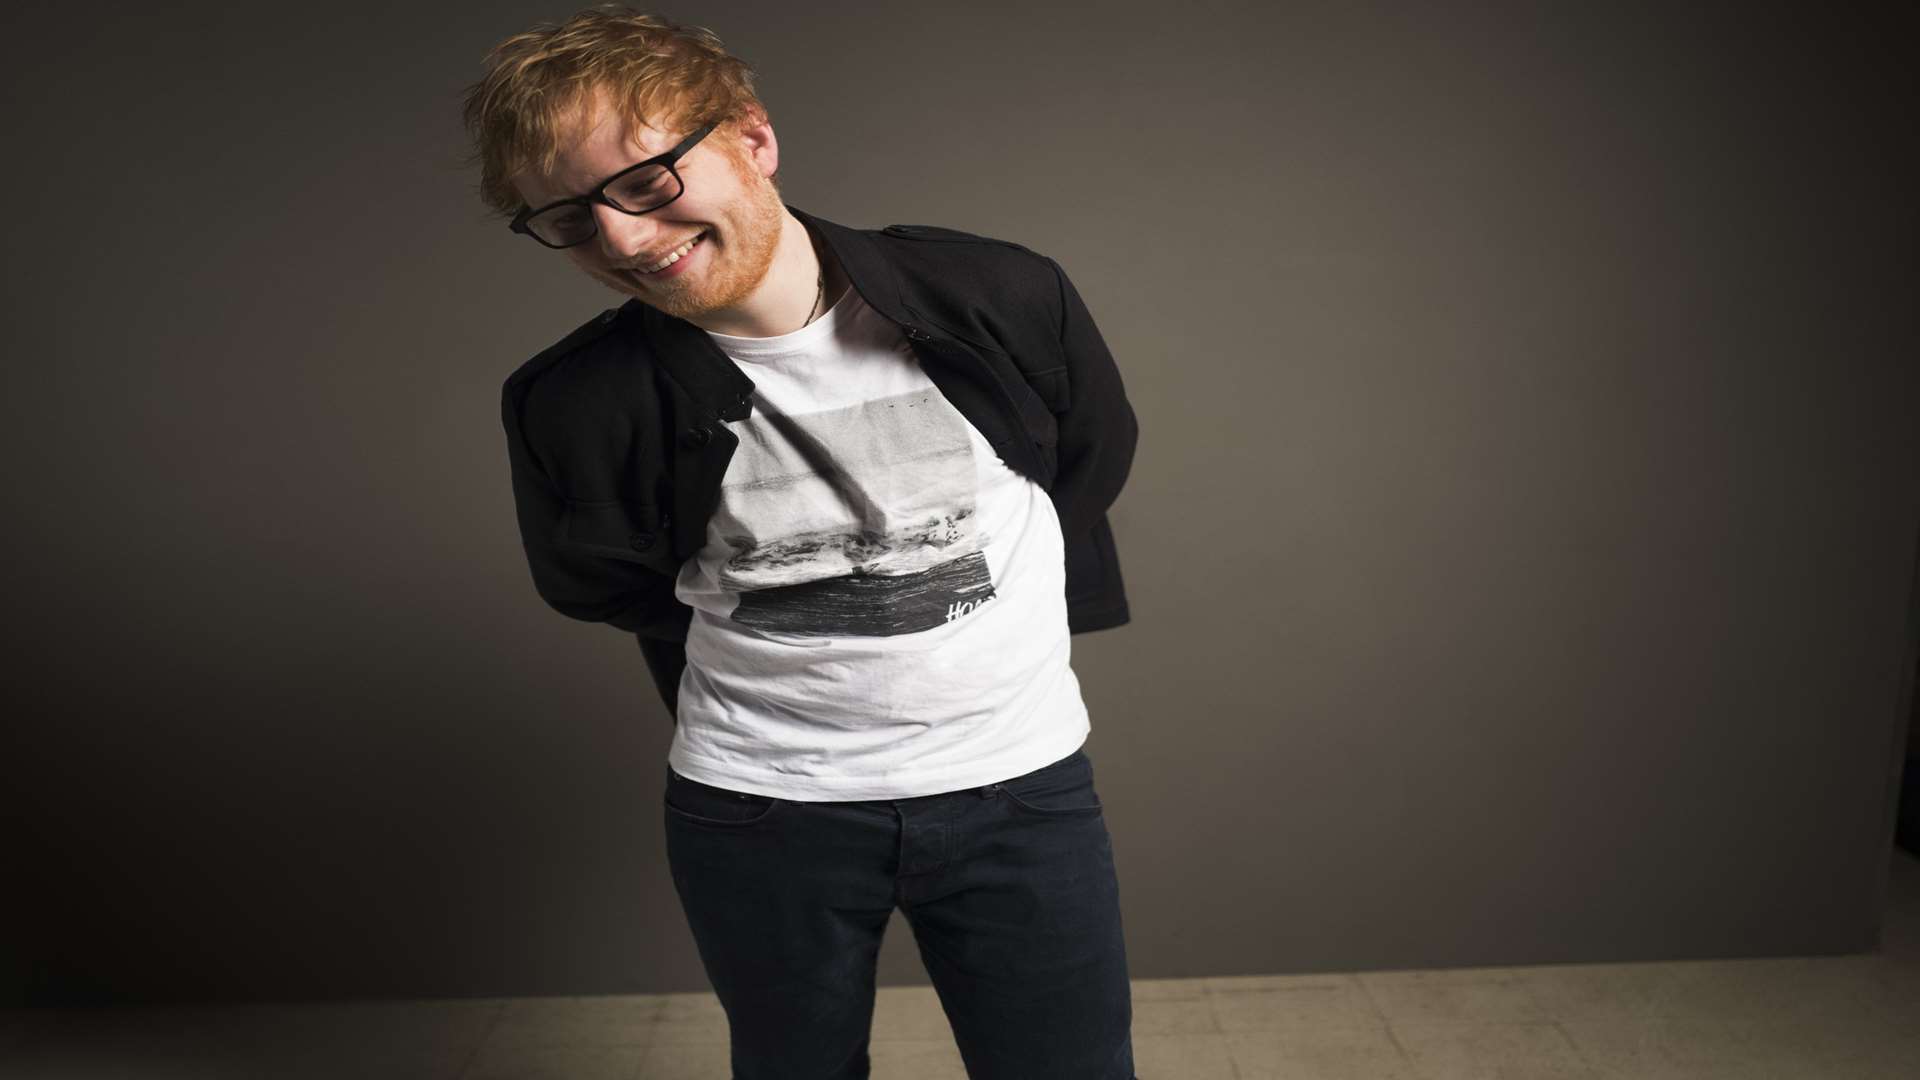 Ed Sheeran will be on kmfm